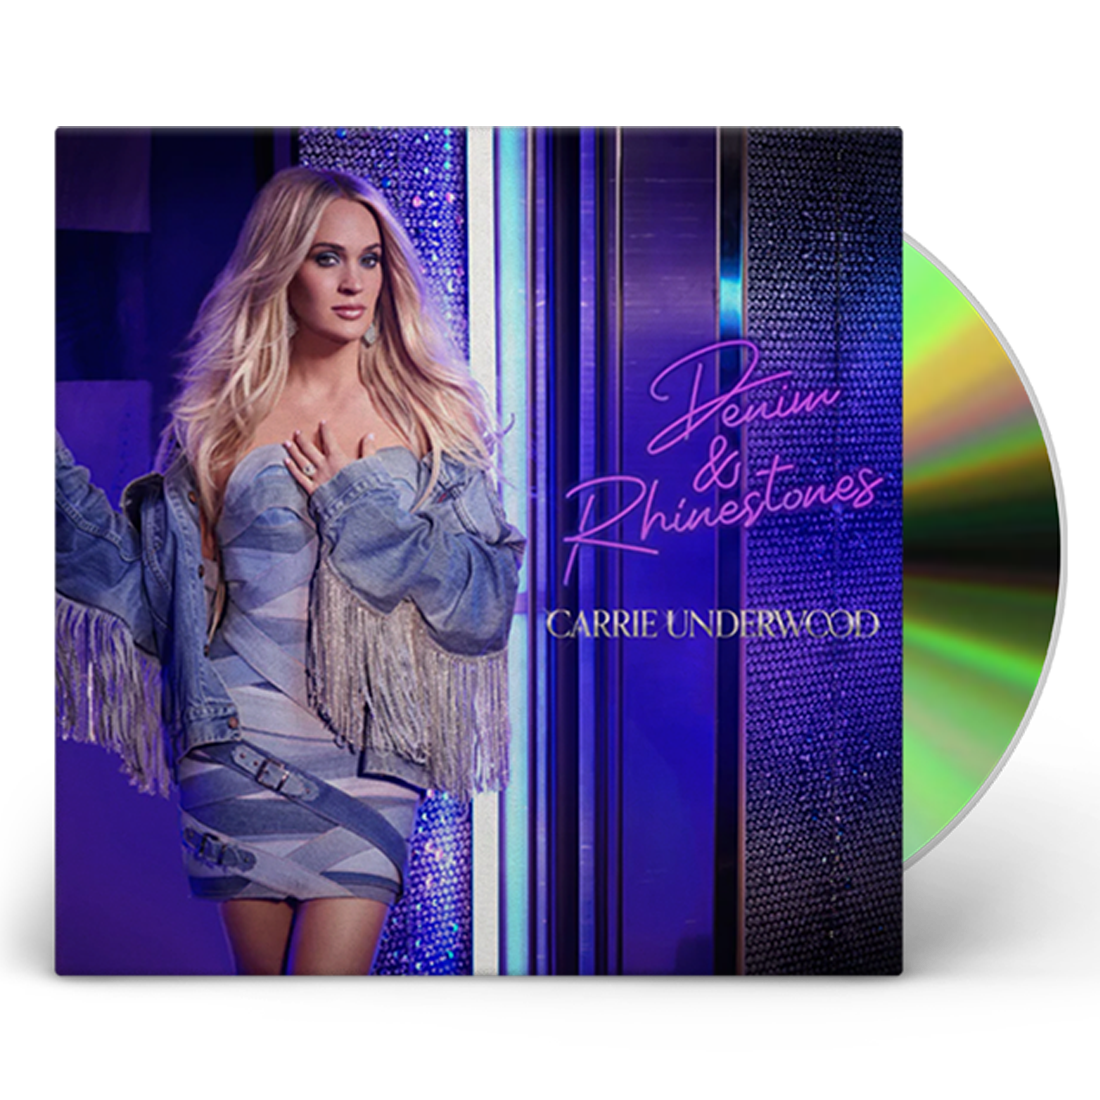 Denim & Rhinestones Deluxe CD